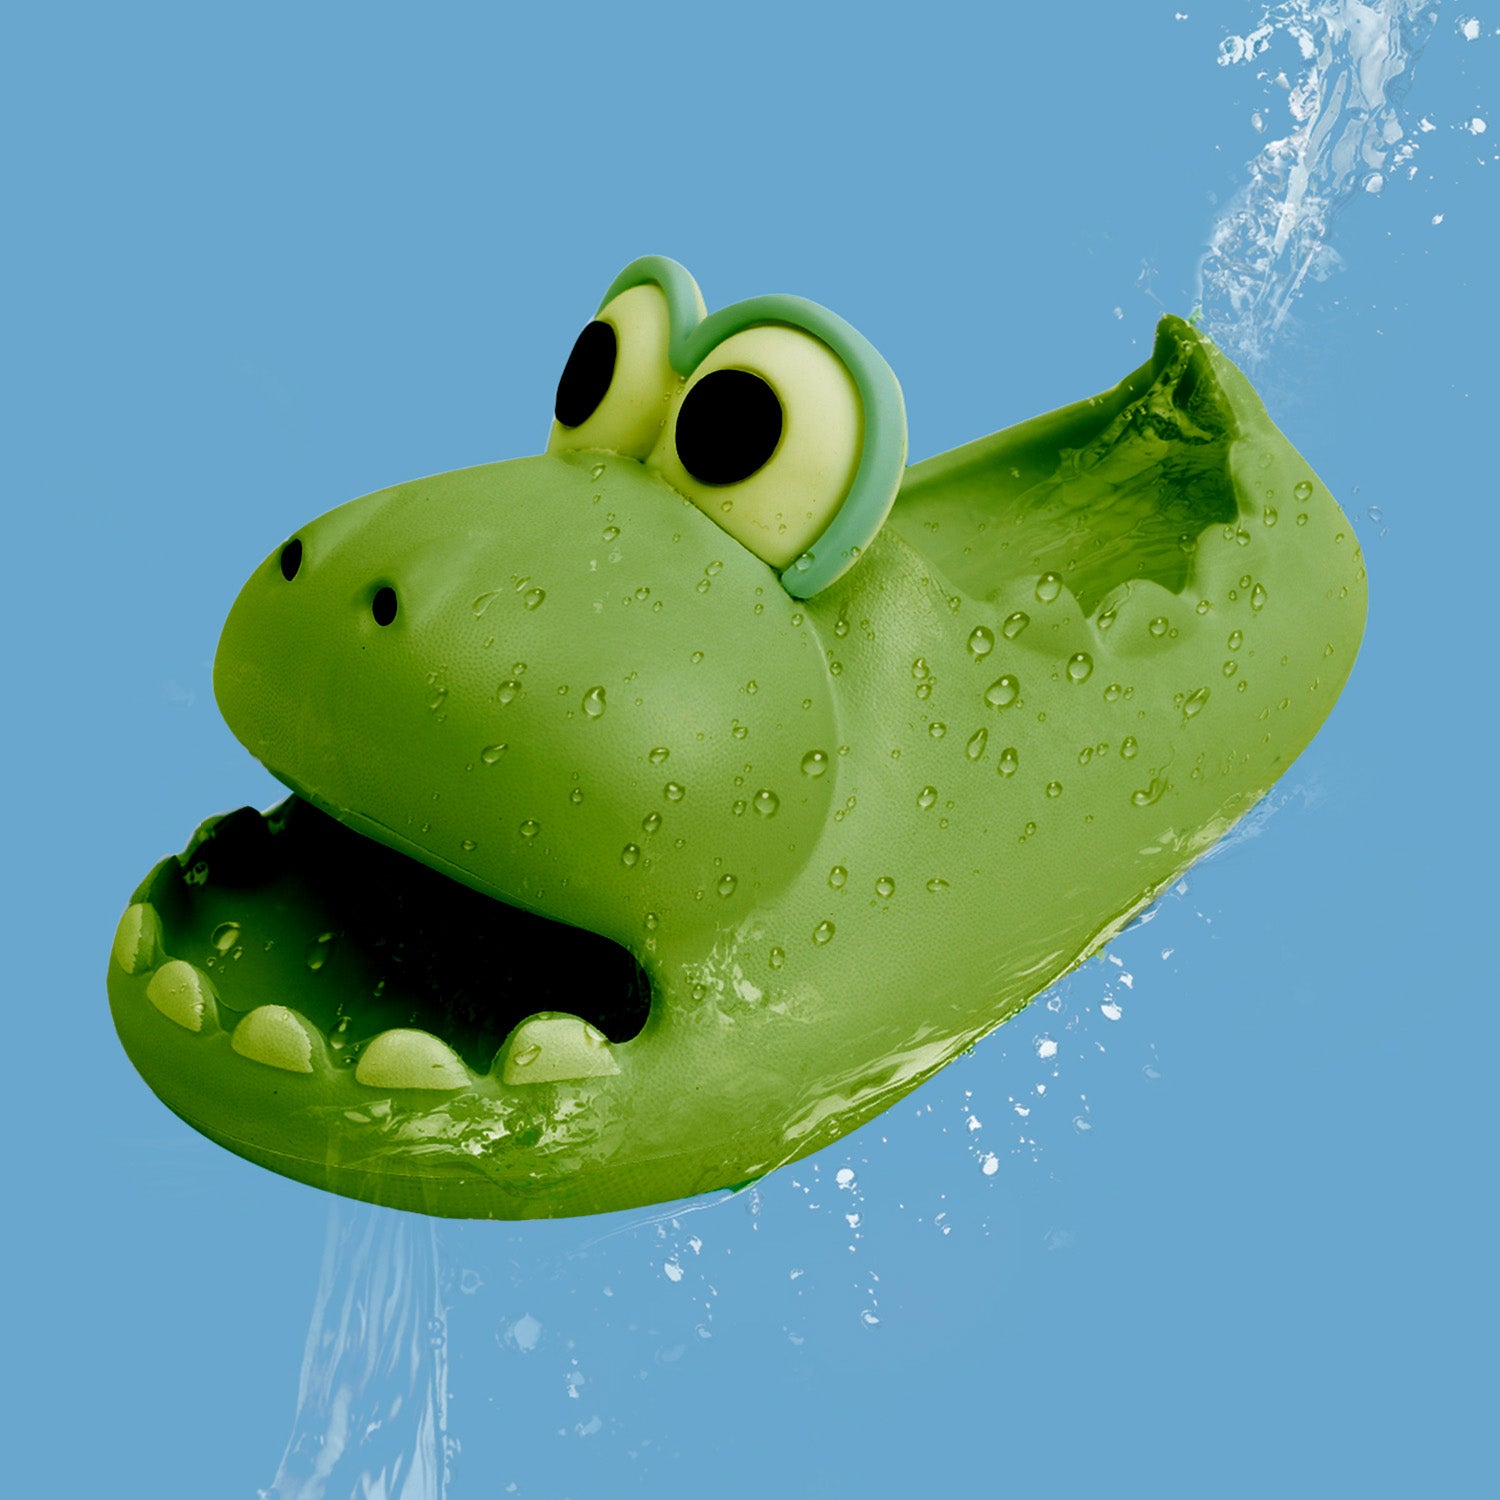 Baby Moo Crocodile Beach Slippers 3D Cartoon Sliders - Green - Baby Moo